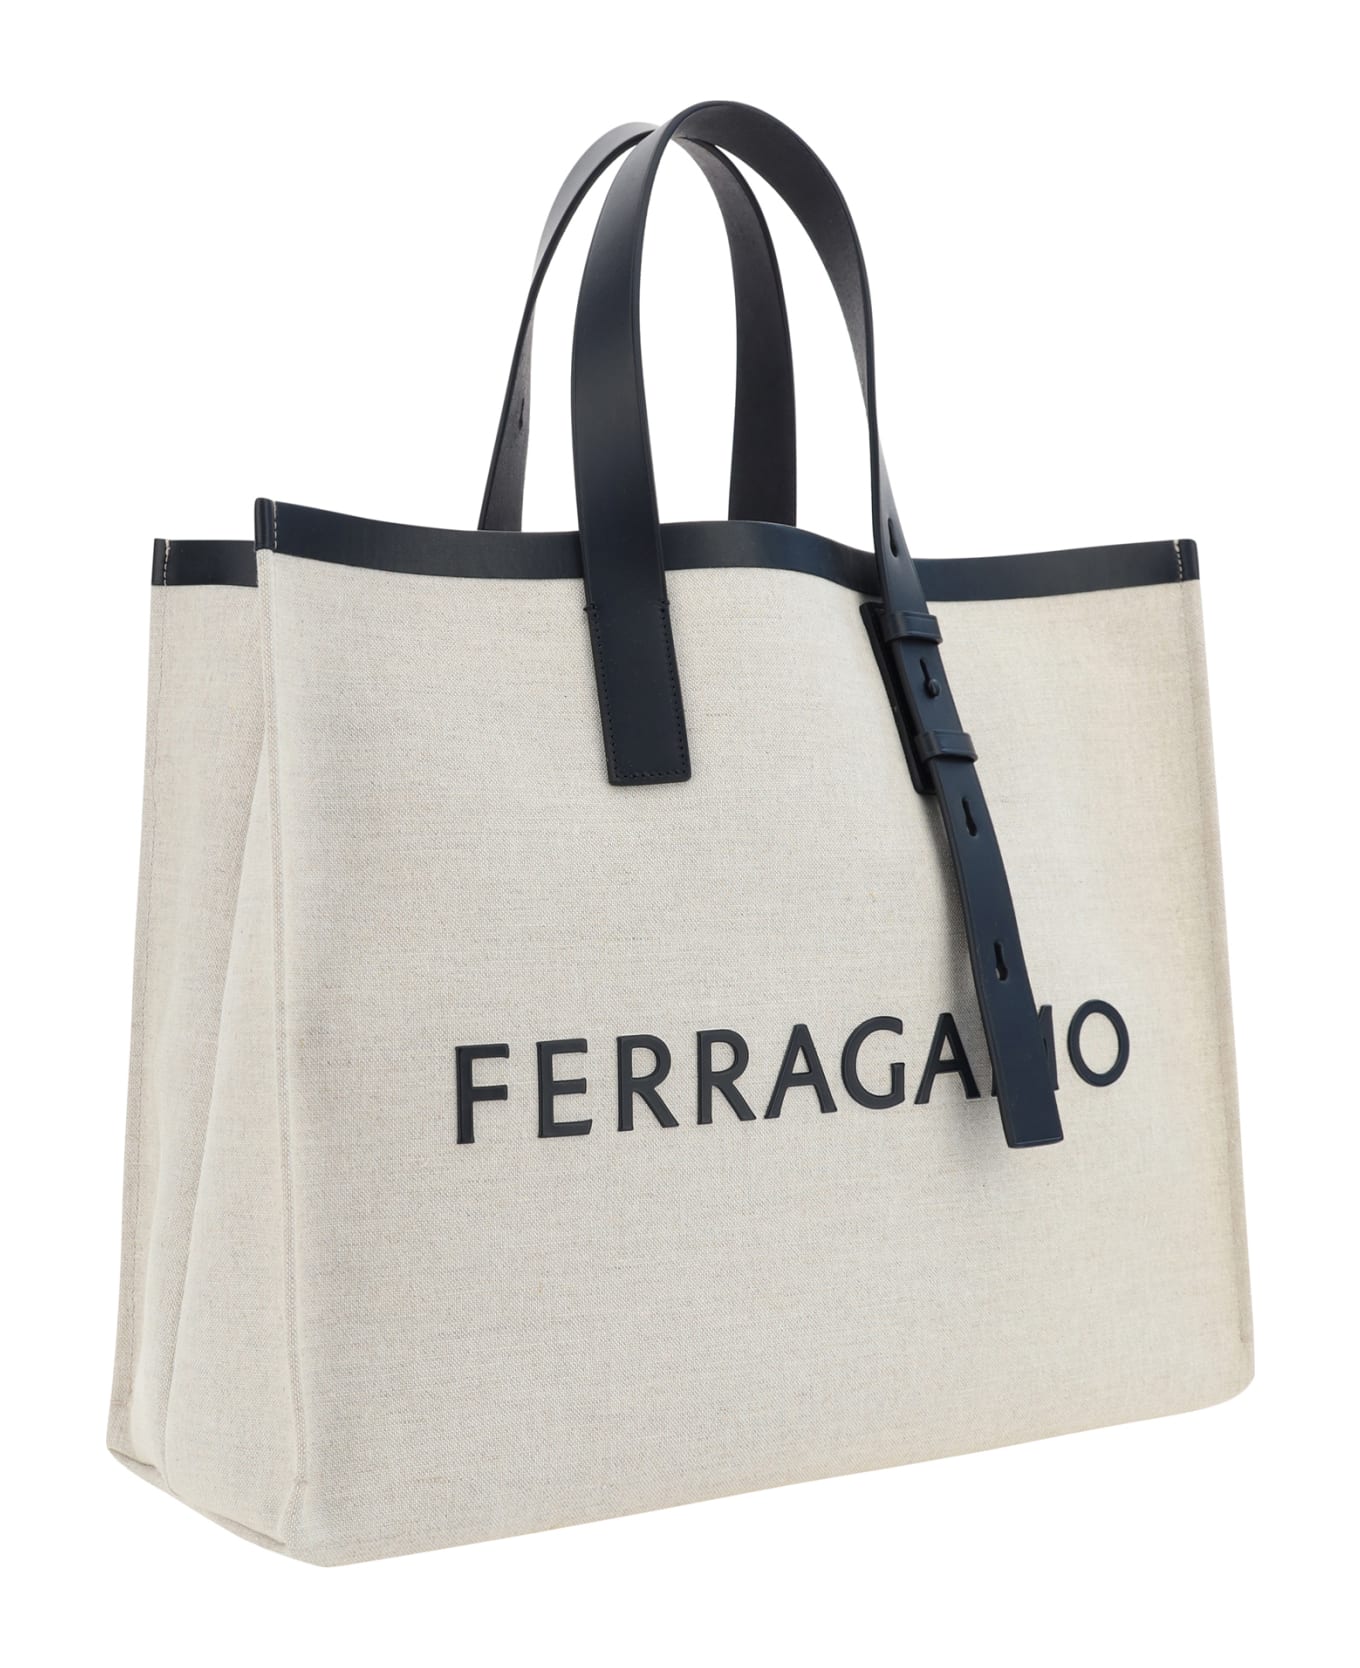 Ferragamo Shopping Bag - Nero